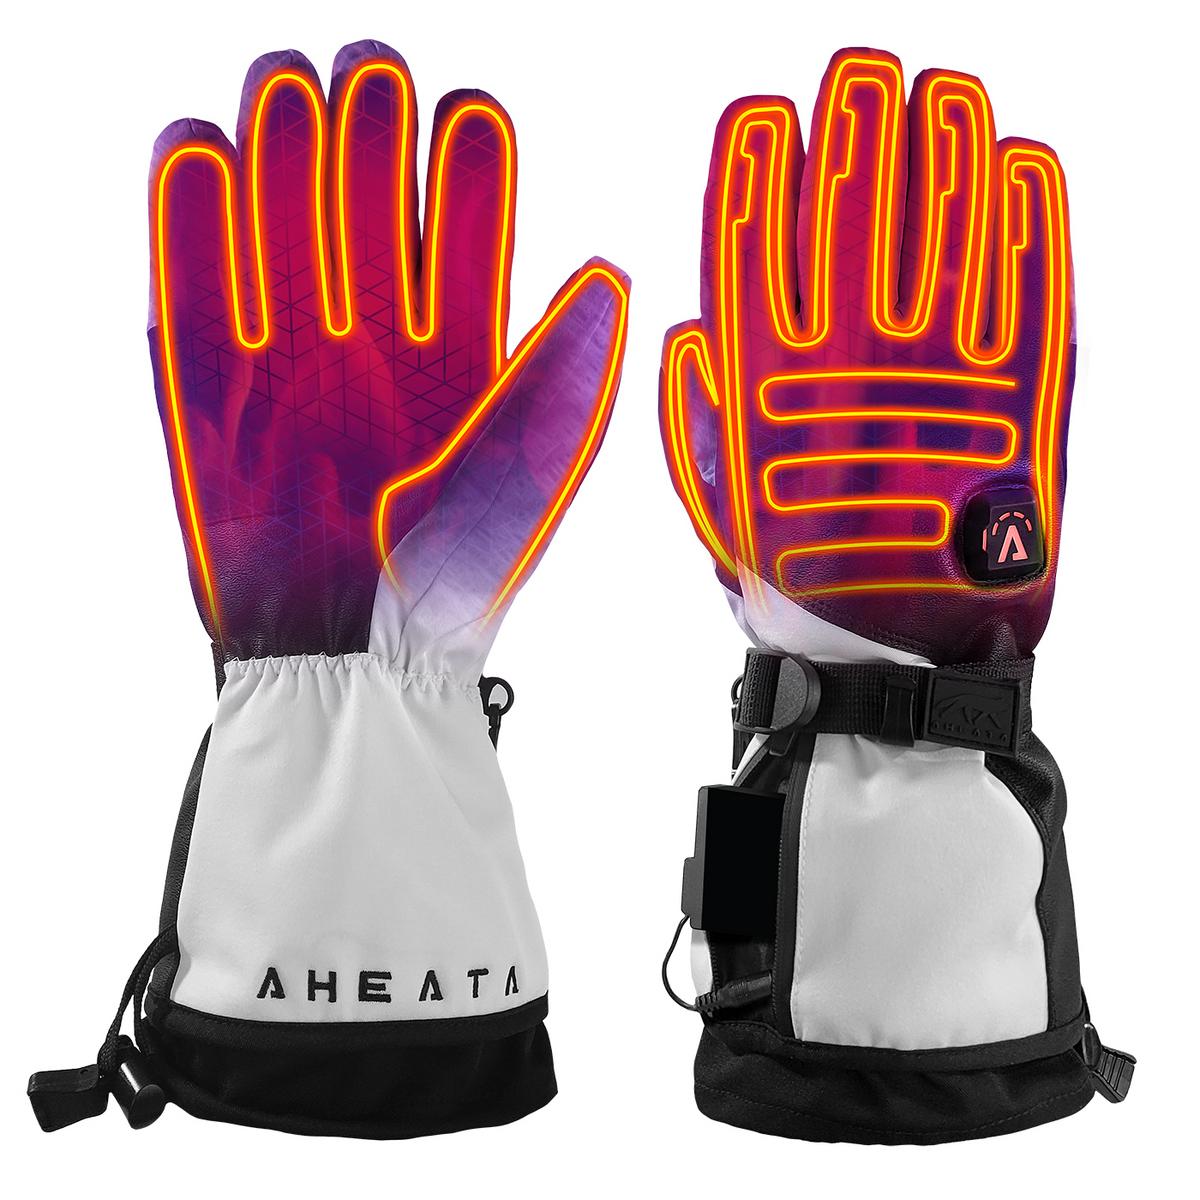 Aheata 7V Battery Heated Gloves - Unisex - Front